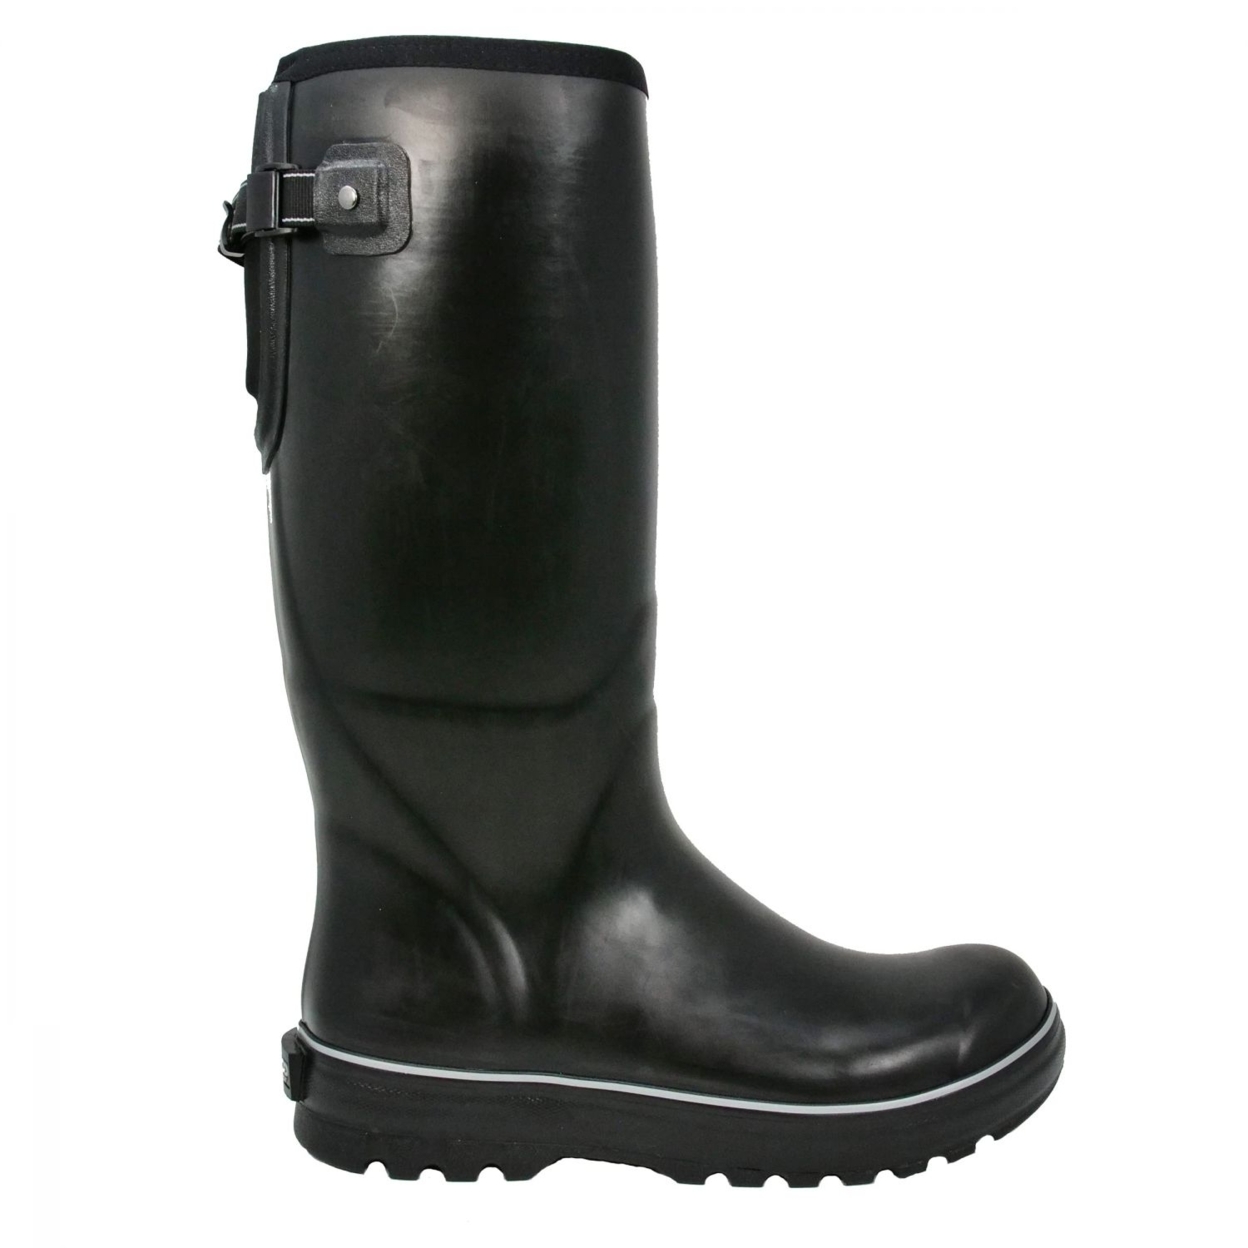 Dryshod Men's Mudslinger Gusset Premium Rubber Farm Boots Black/Grey - MDG-MH-BK ONE SIZE BLACK/GREY - BLACK/GREY, 9